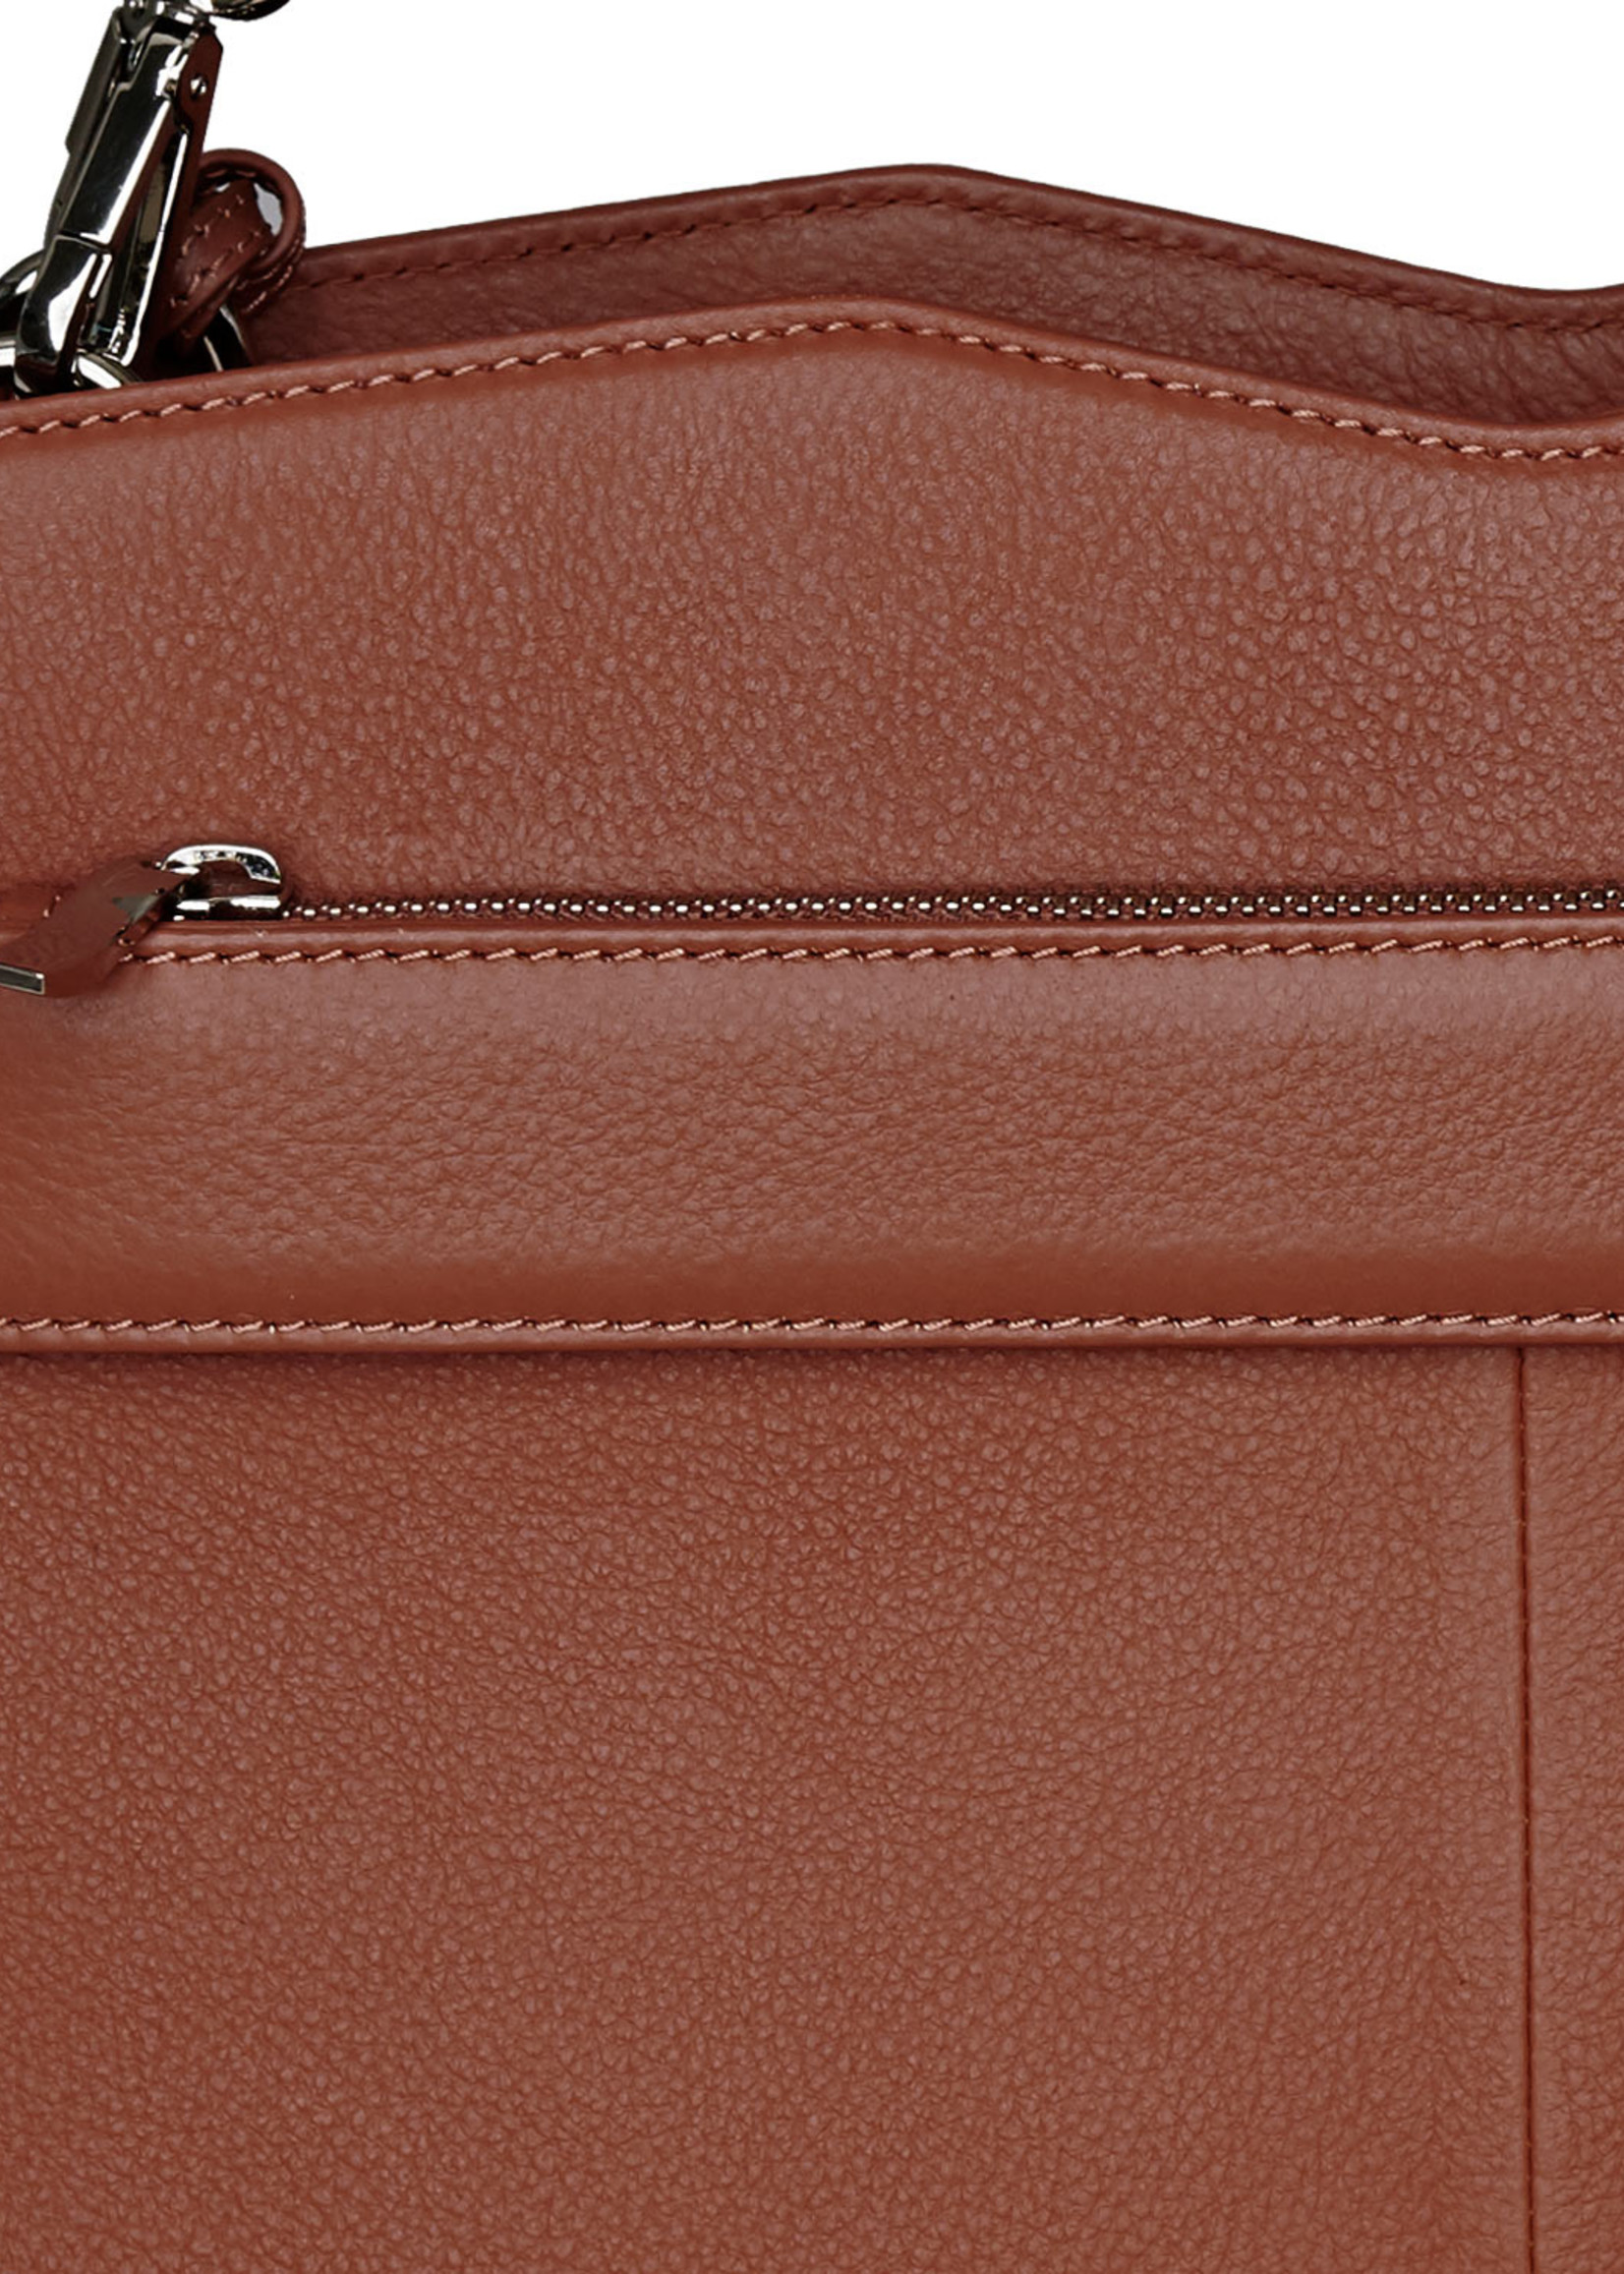 SOCHA Elegante handtas met uitneembare laptop sleeve.